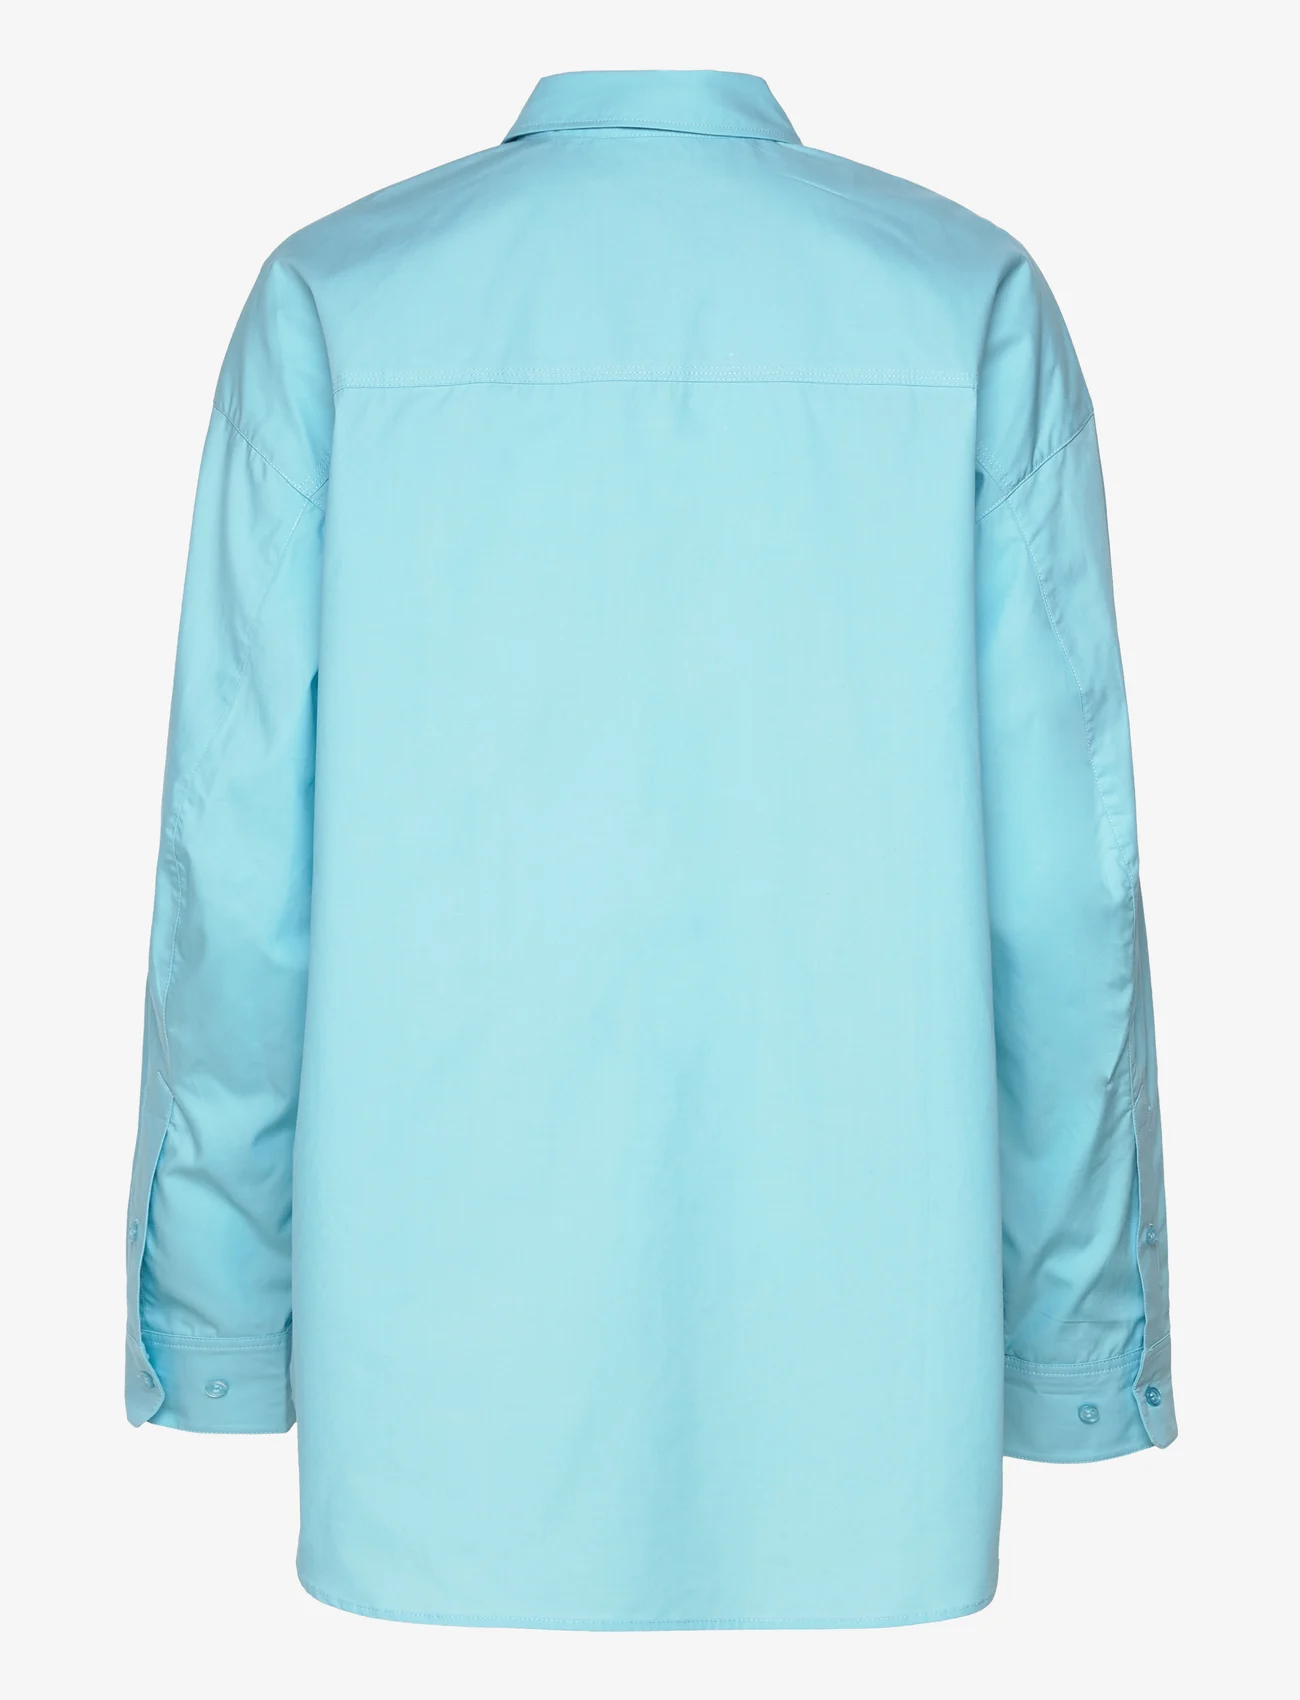 Samsøe Samsøe - Lua np shirt 14644 - long-sleeved shirts - blue topaz - 1